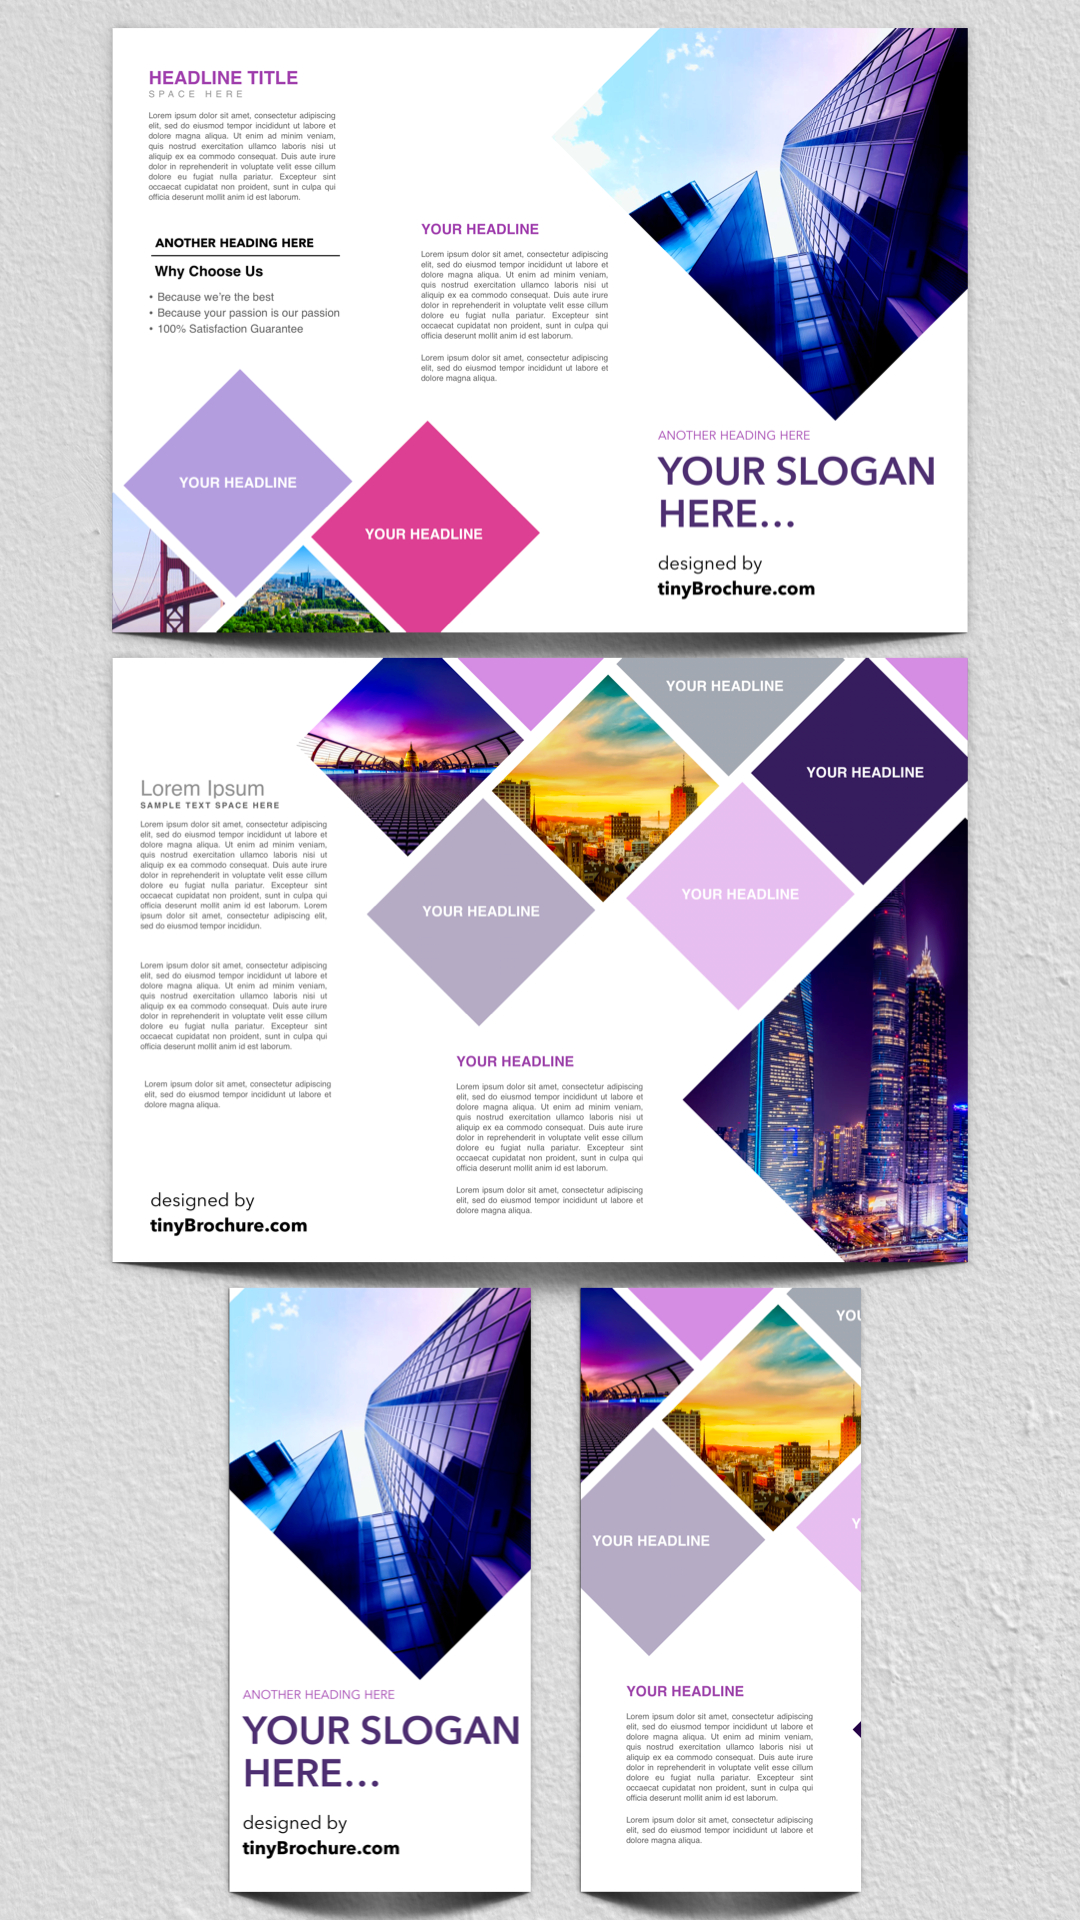 3 Panel Brochure Template Google Docs Free | Brochure Within Travel Brochure Template Google Docs